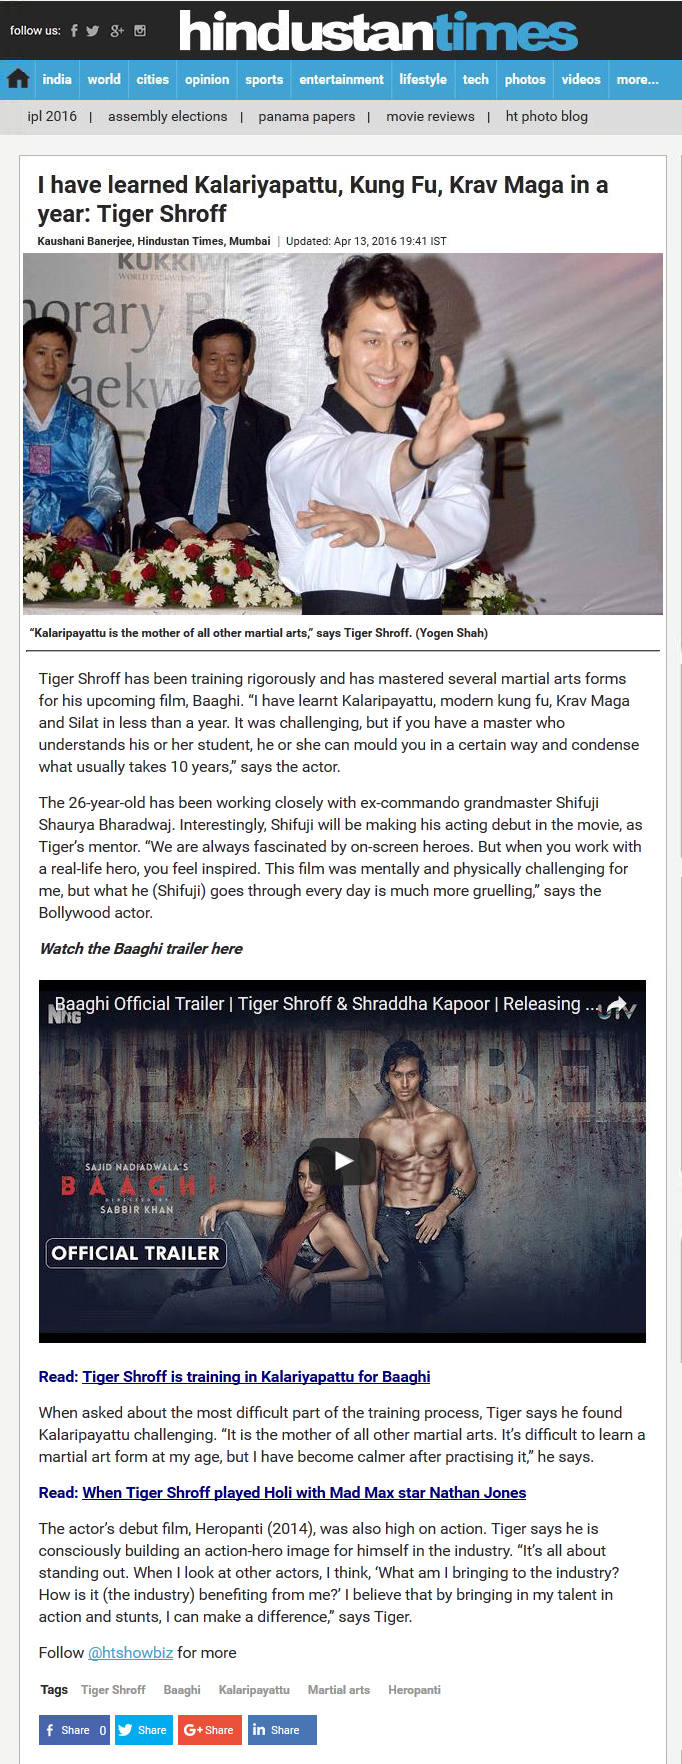 I have learned Kalariyapattu, Kung Fu, Krav Maga in a year: Tiger Shroff